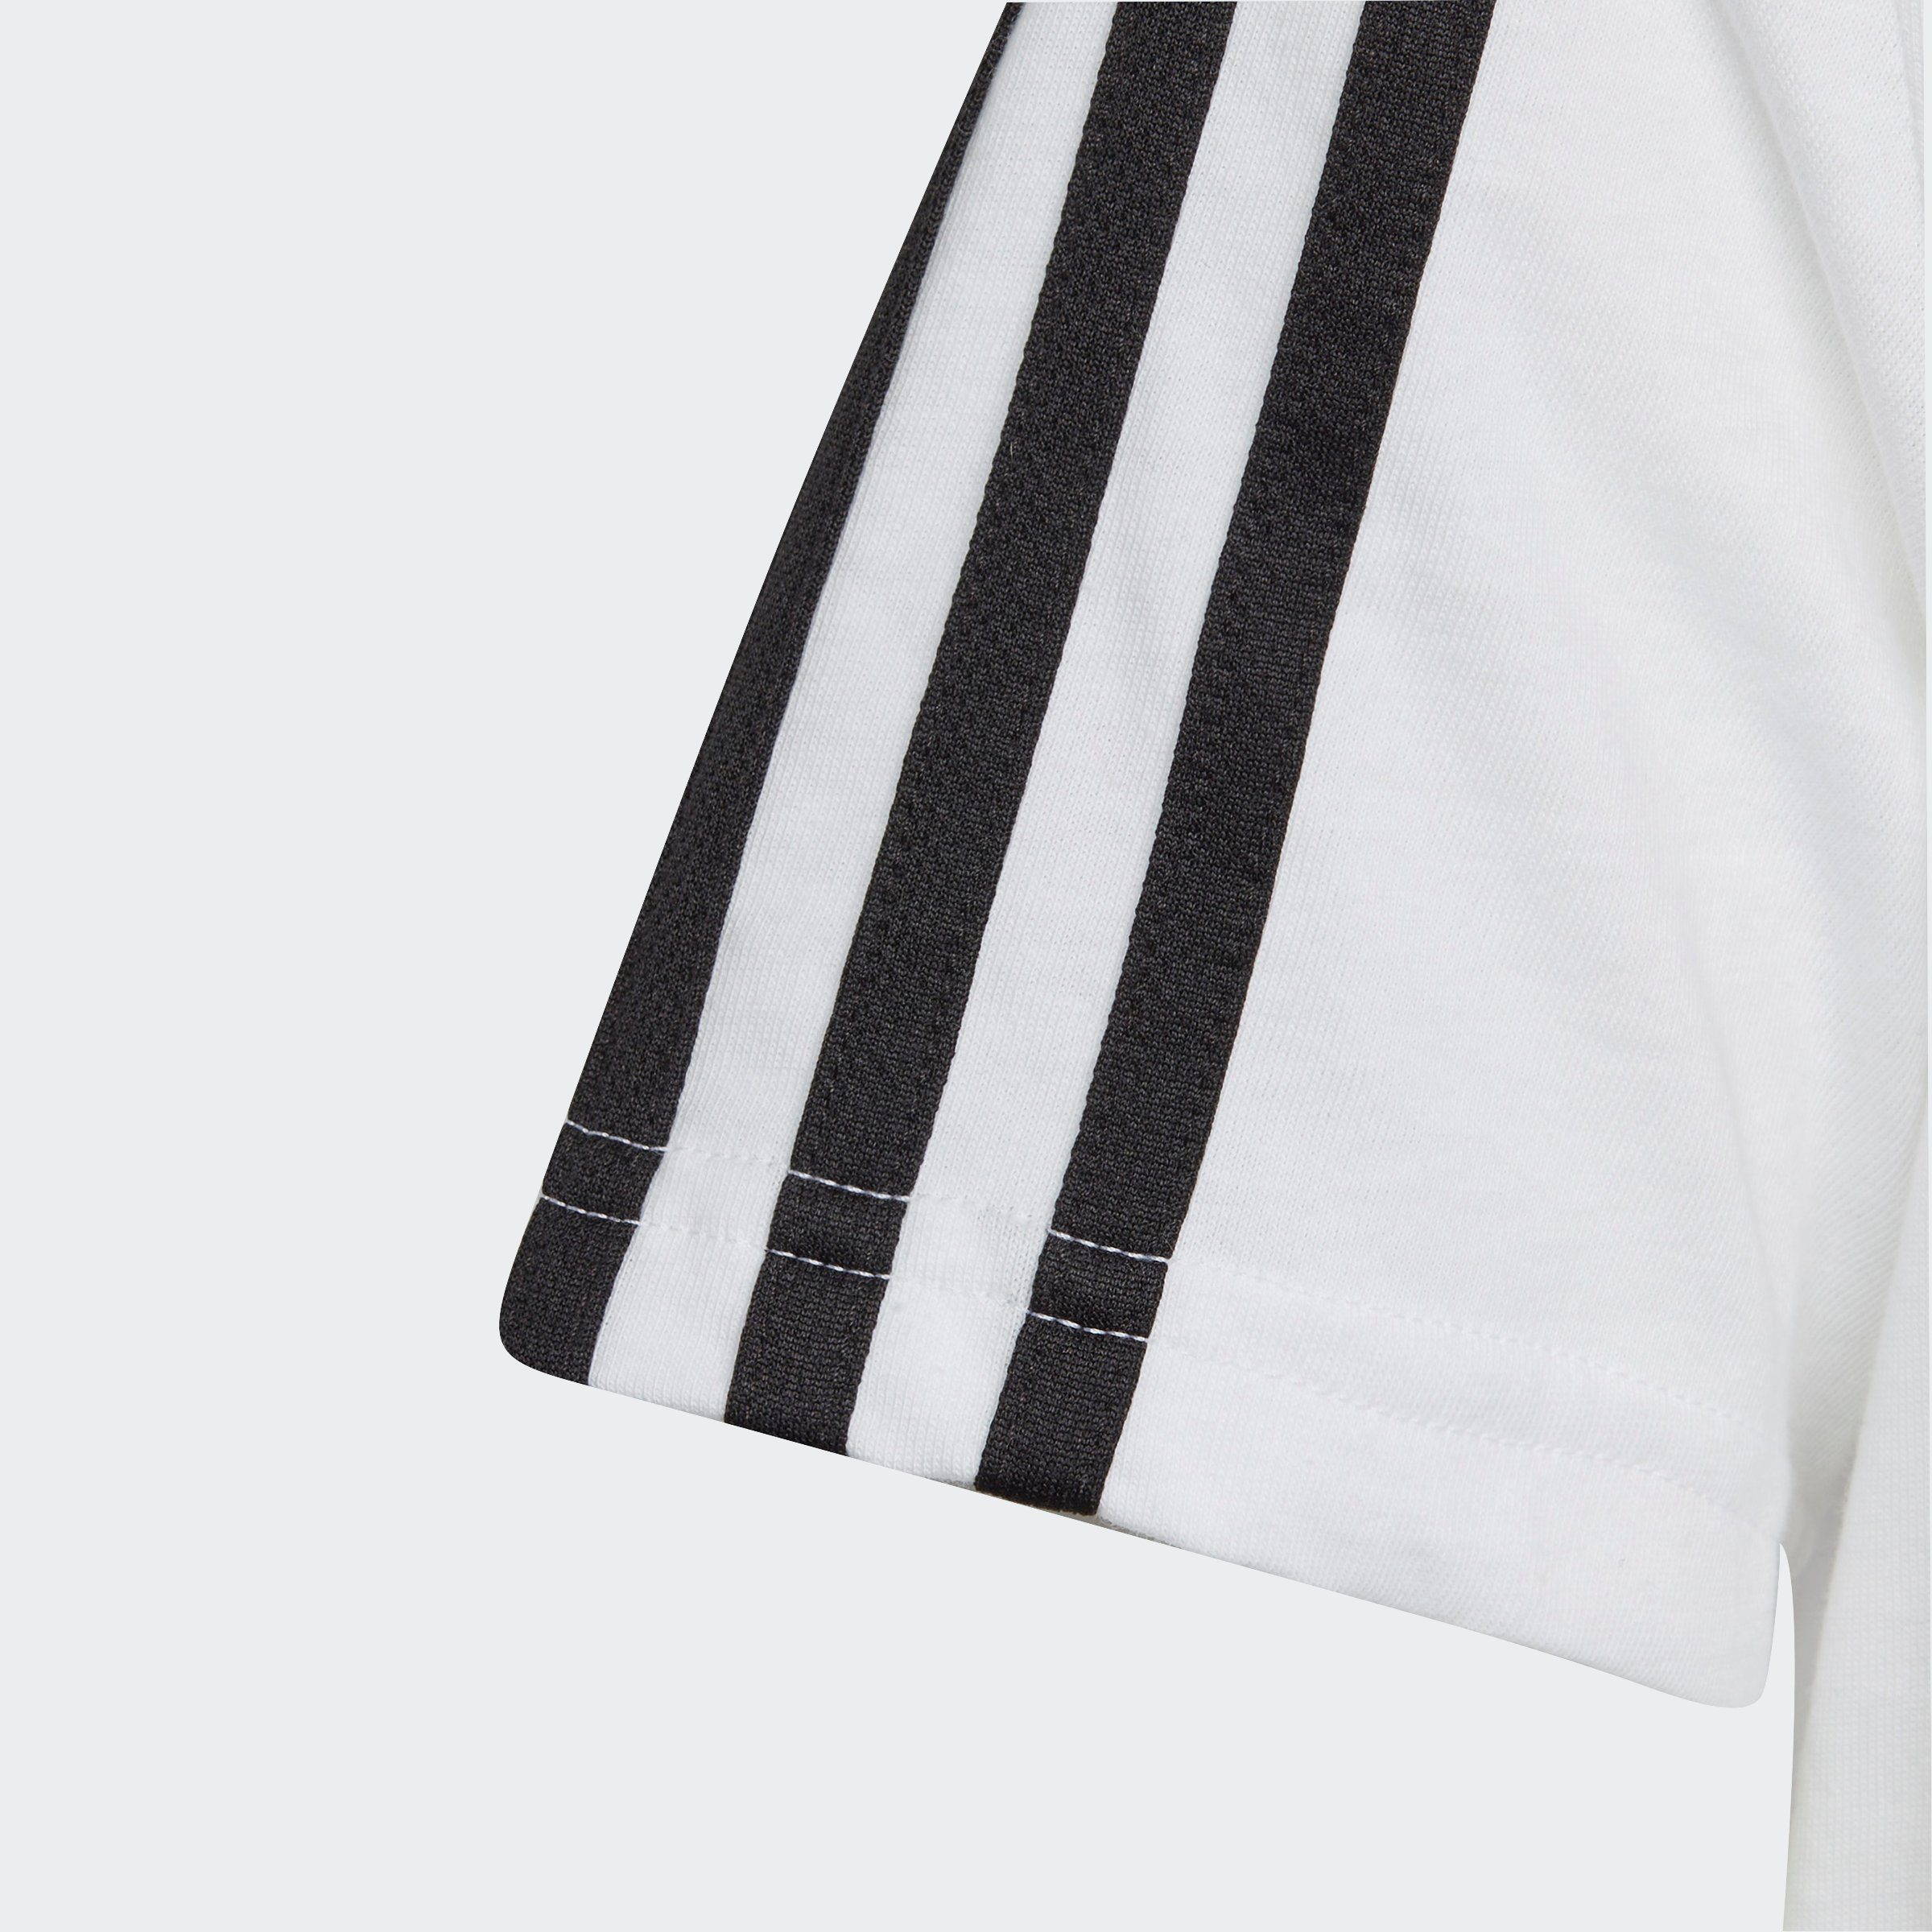 / Sportswear TEE Black adidas T-Shirt 3S U White